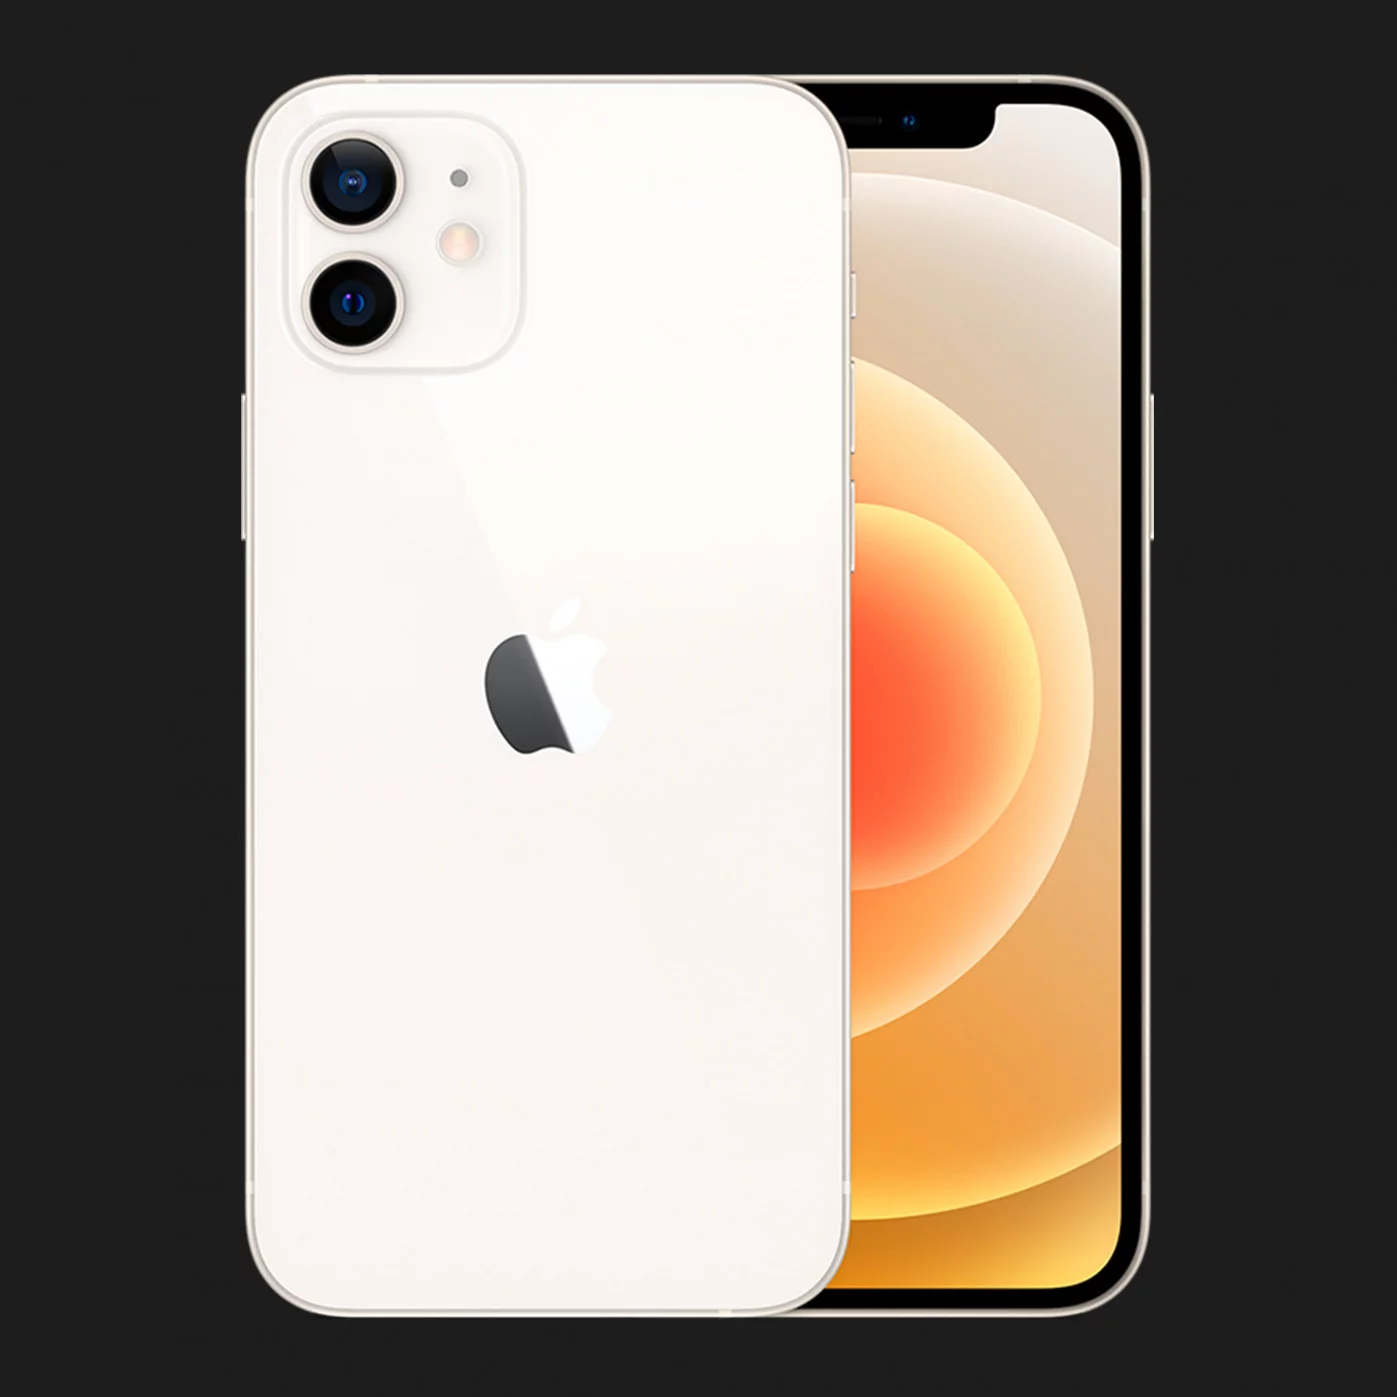 Купить Apple iPhone 12 mini 64GB (White) — цены ⚡, отзывы ⚡, характеристики  — ЯБКО